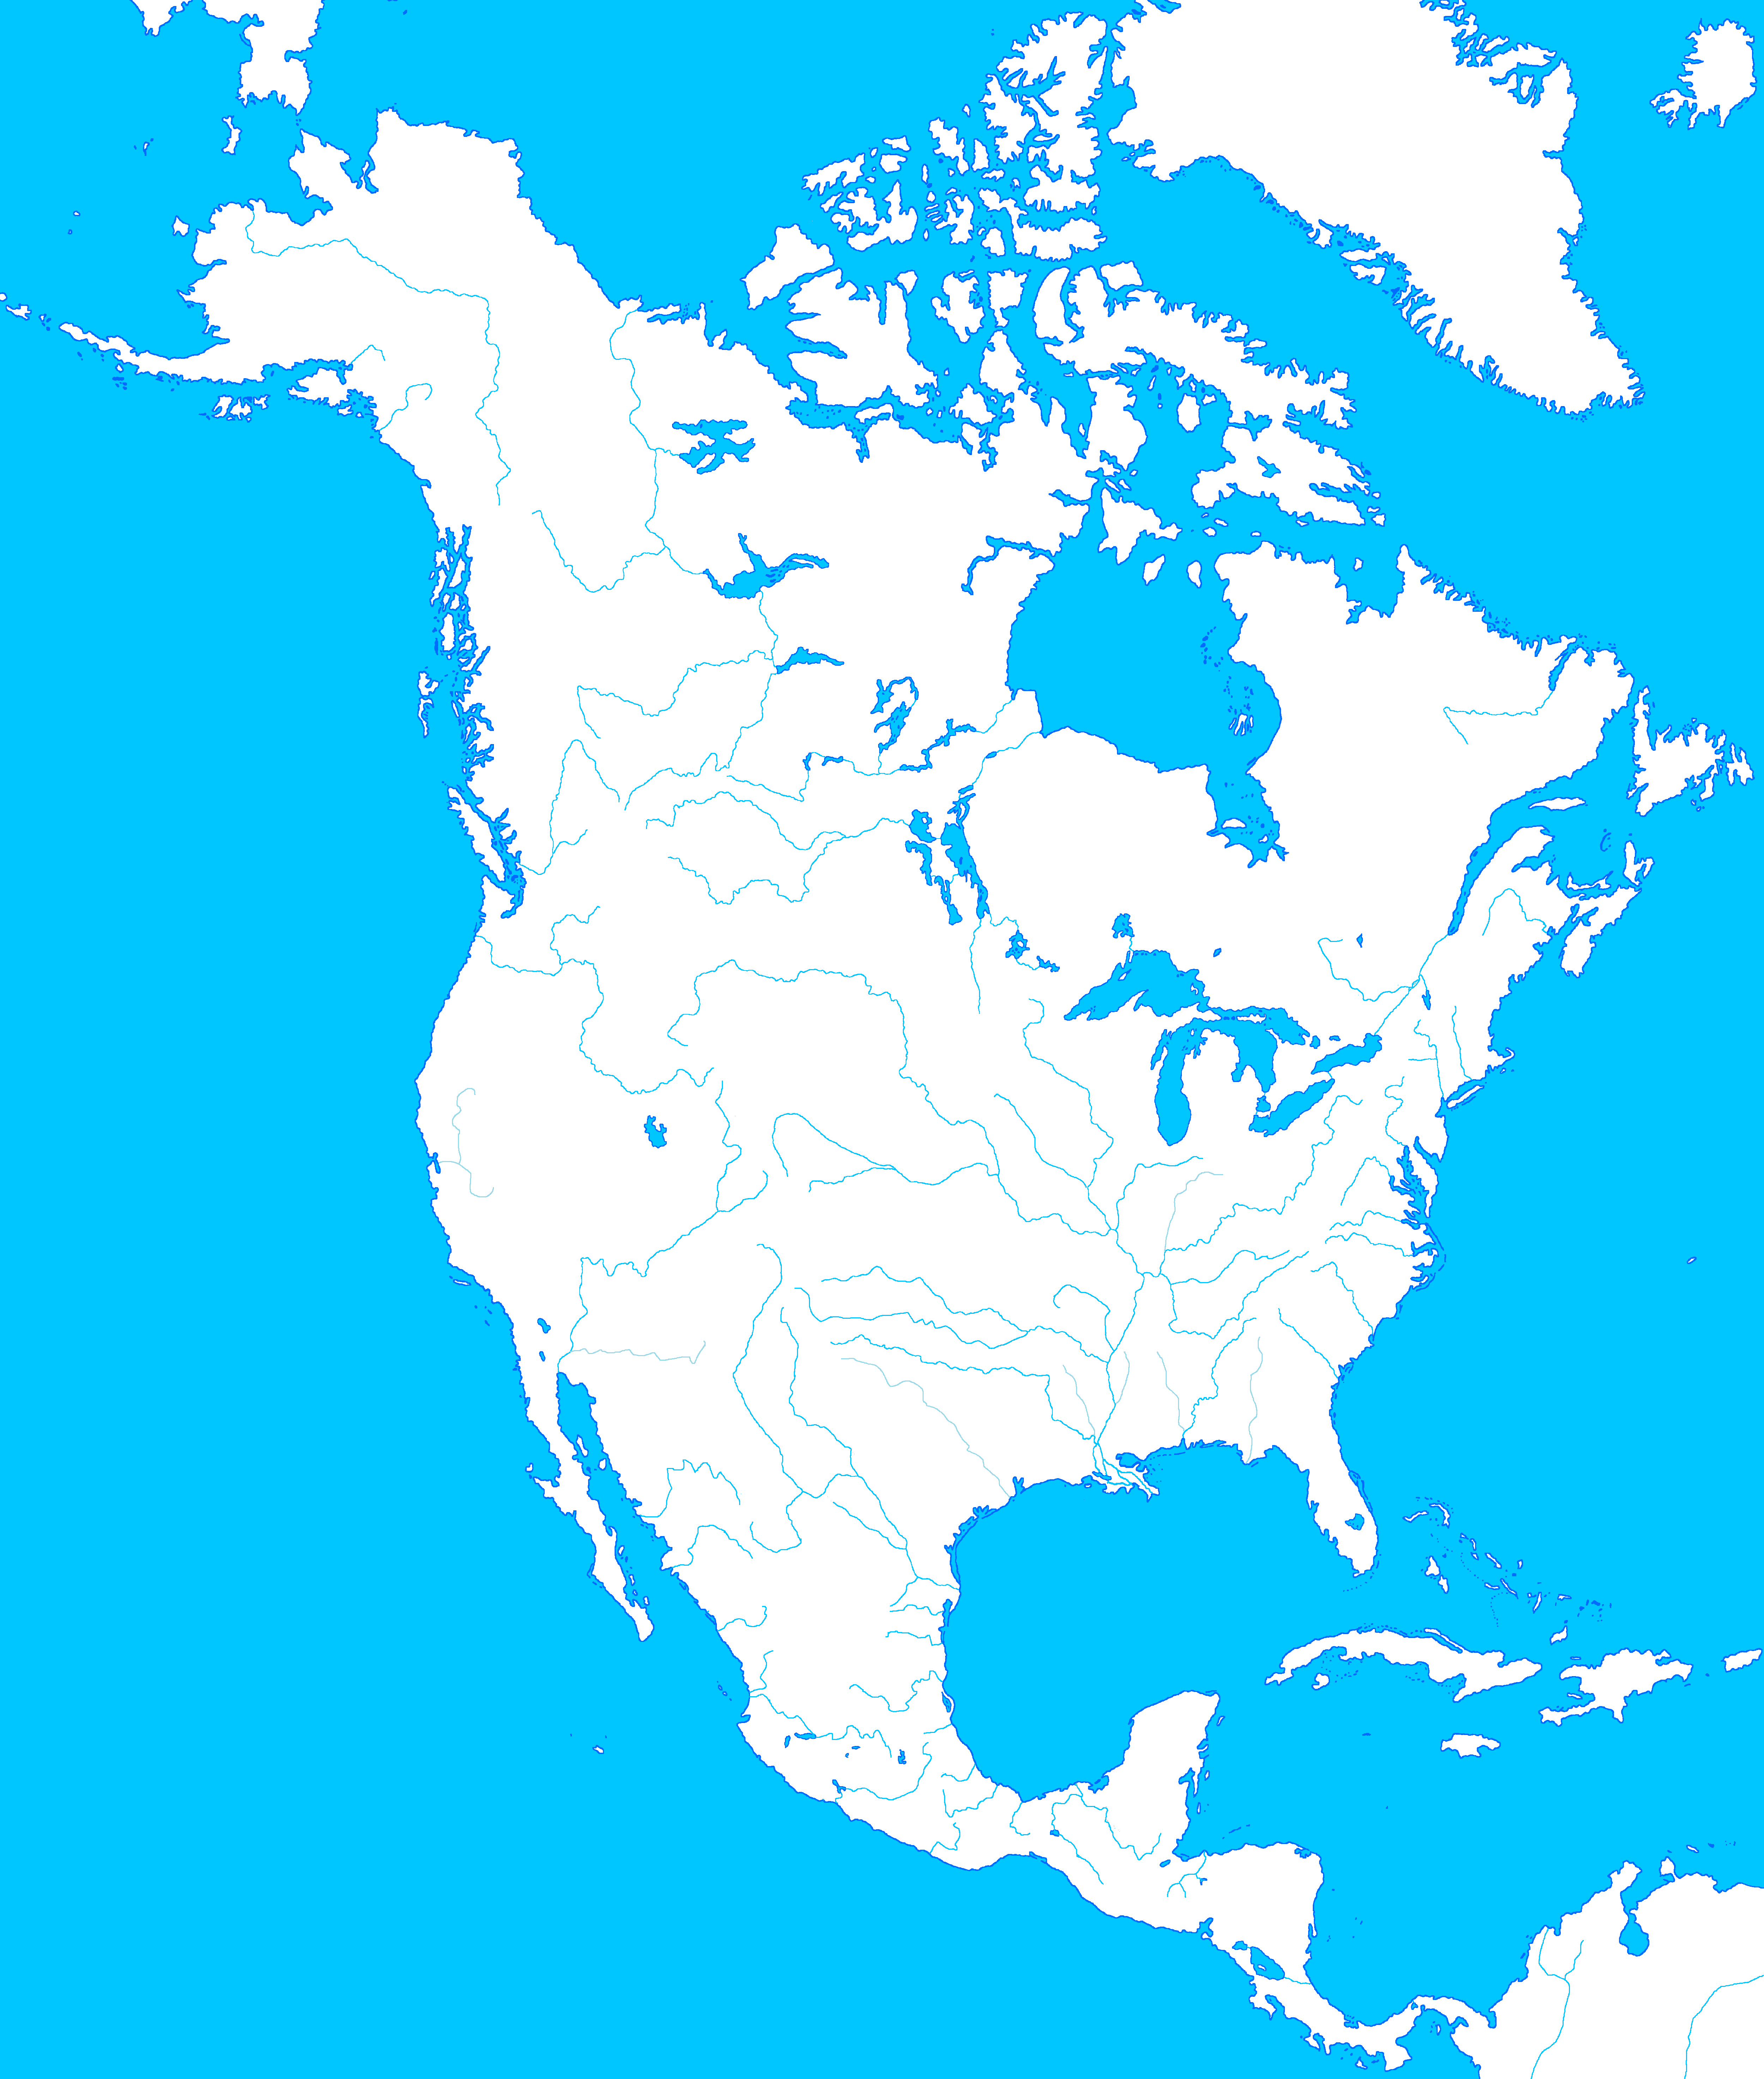 Северная америка работа с картой. Контур материка Северная Америка. Северная Америка материк контурная карта. Карта Северной Америки без названий. Физическая карта материка Северная Америка.